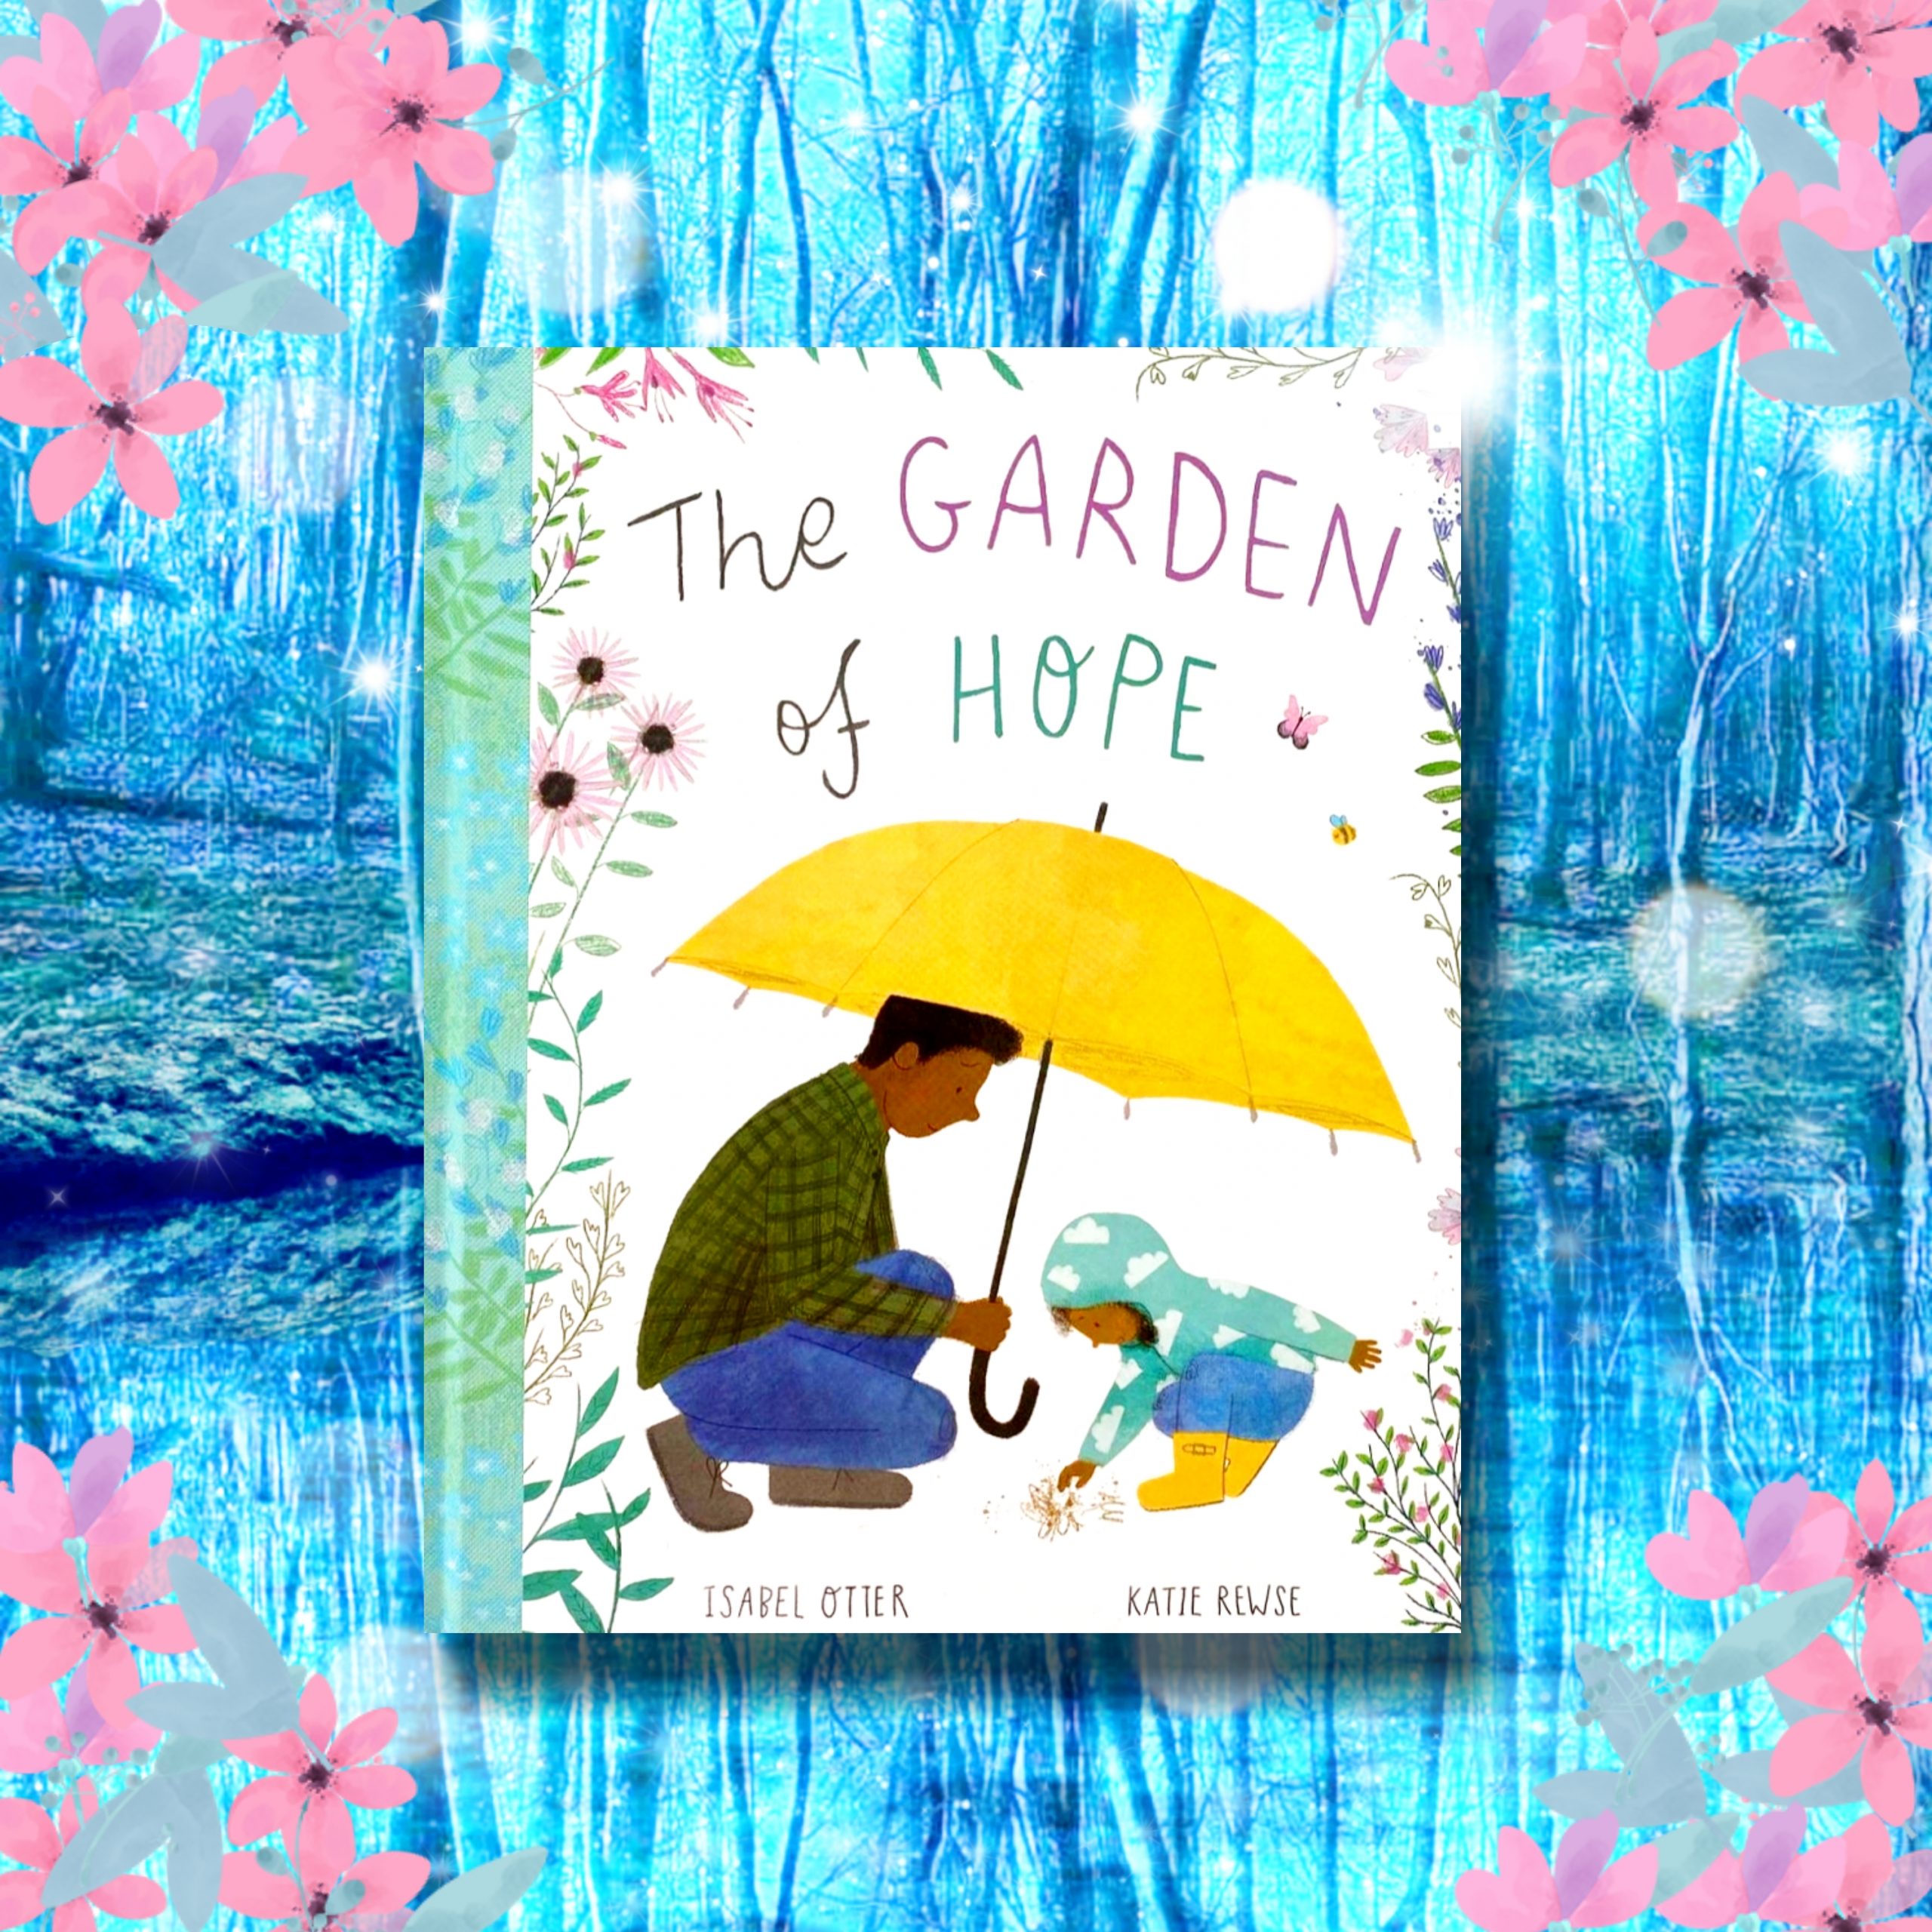 The Garden of Hope